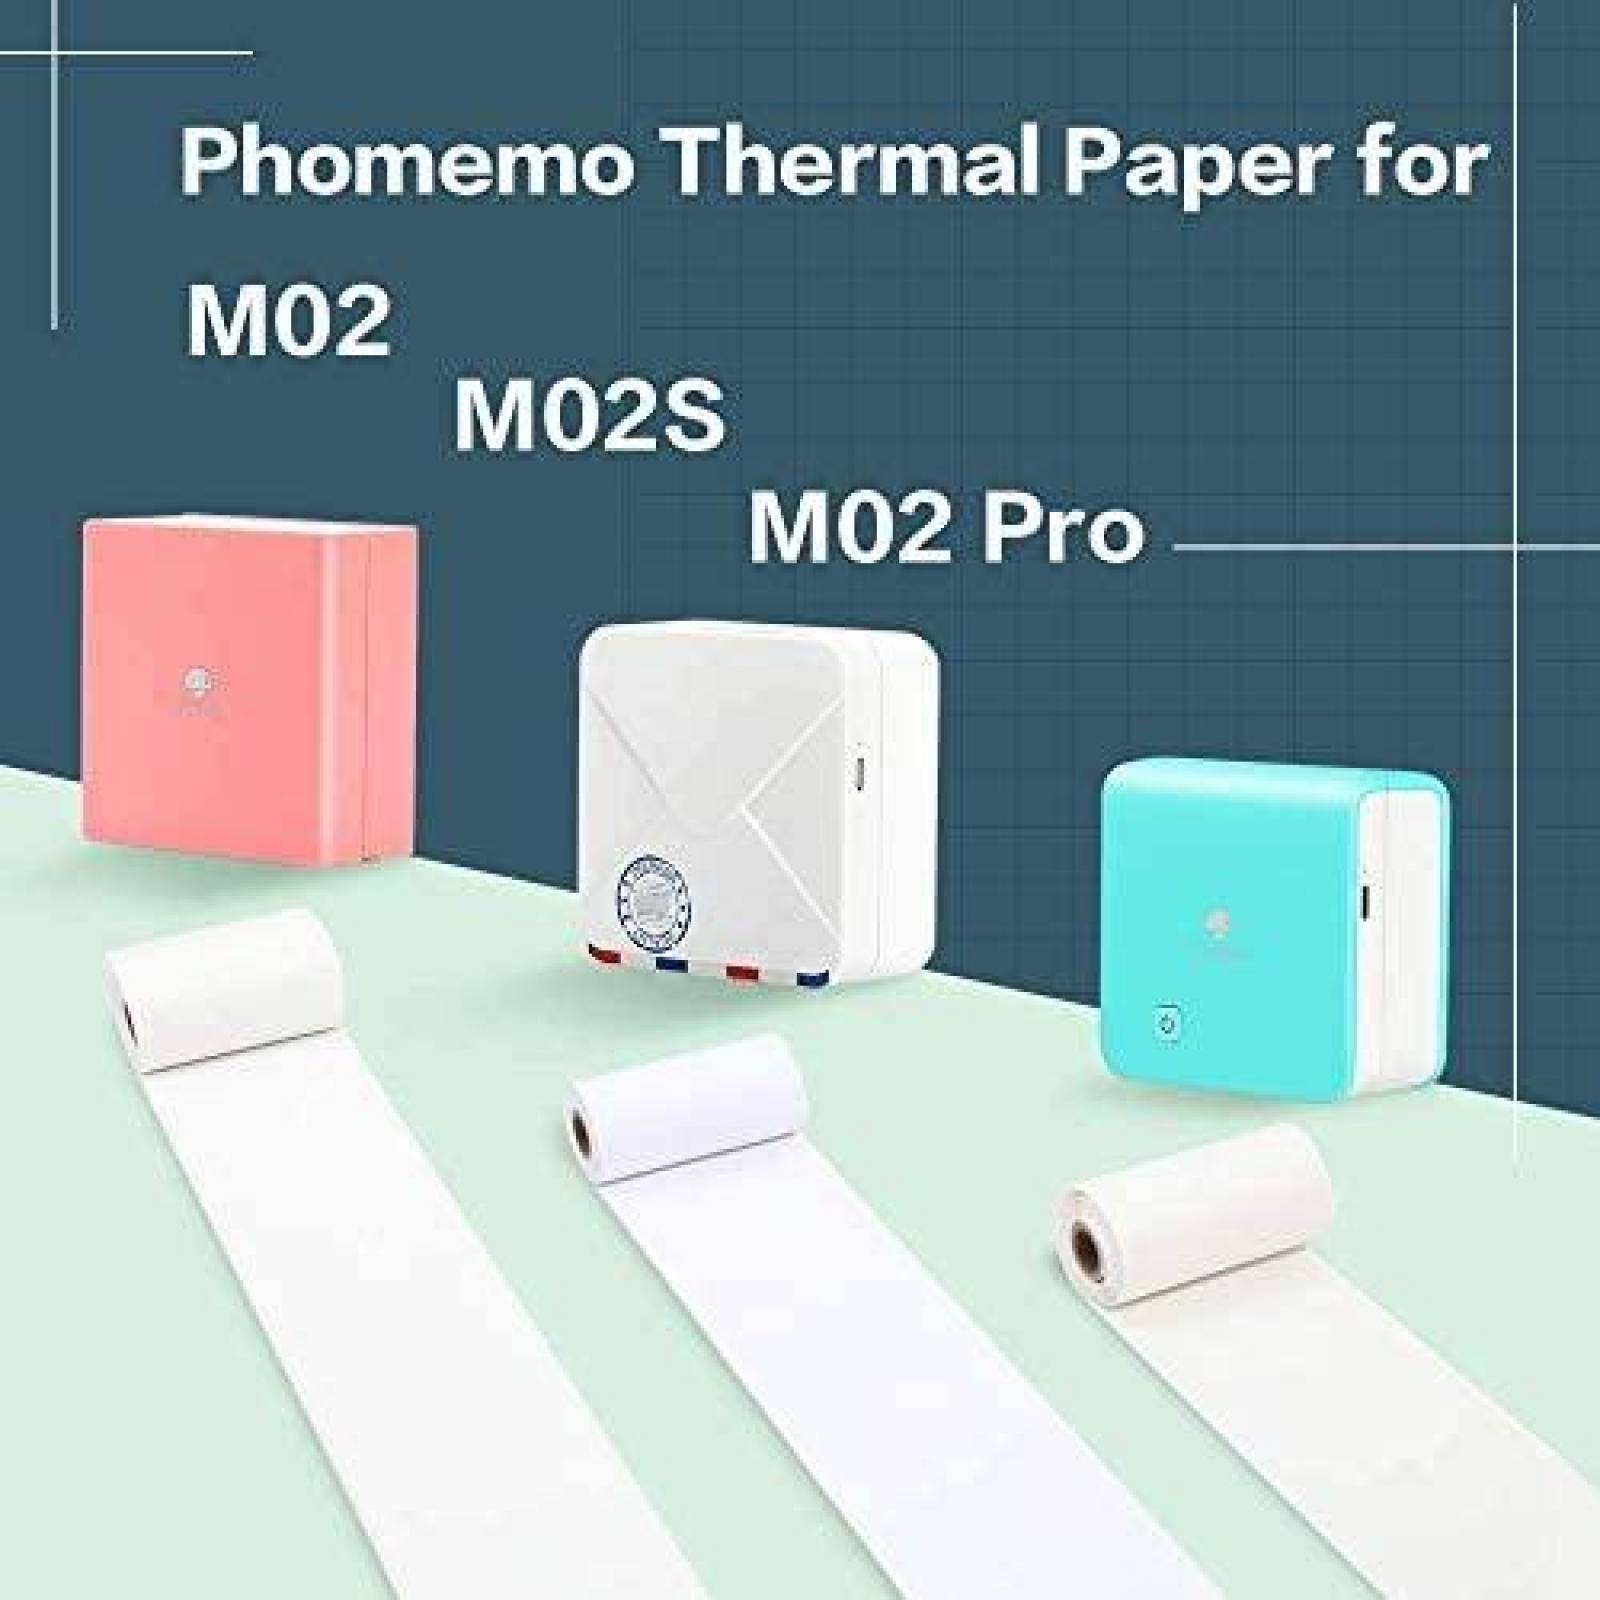 Mini impresora Phomemo M02S Termica+3 rollos papel adhesivo